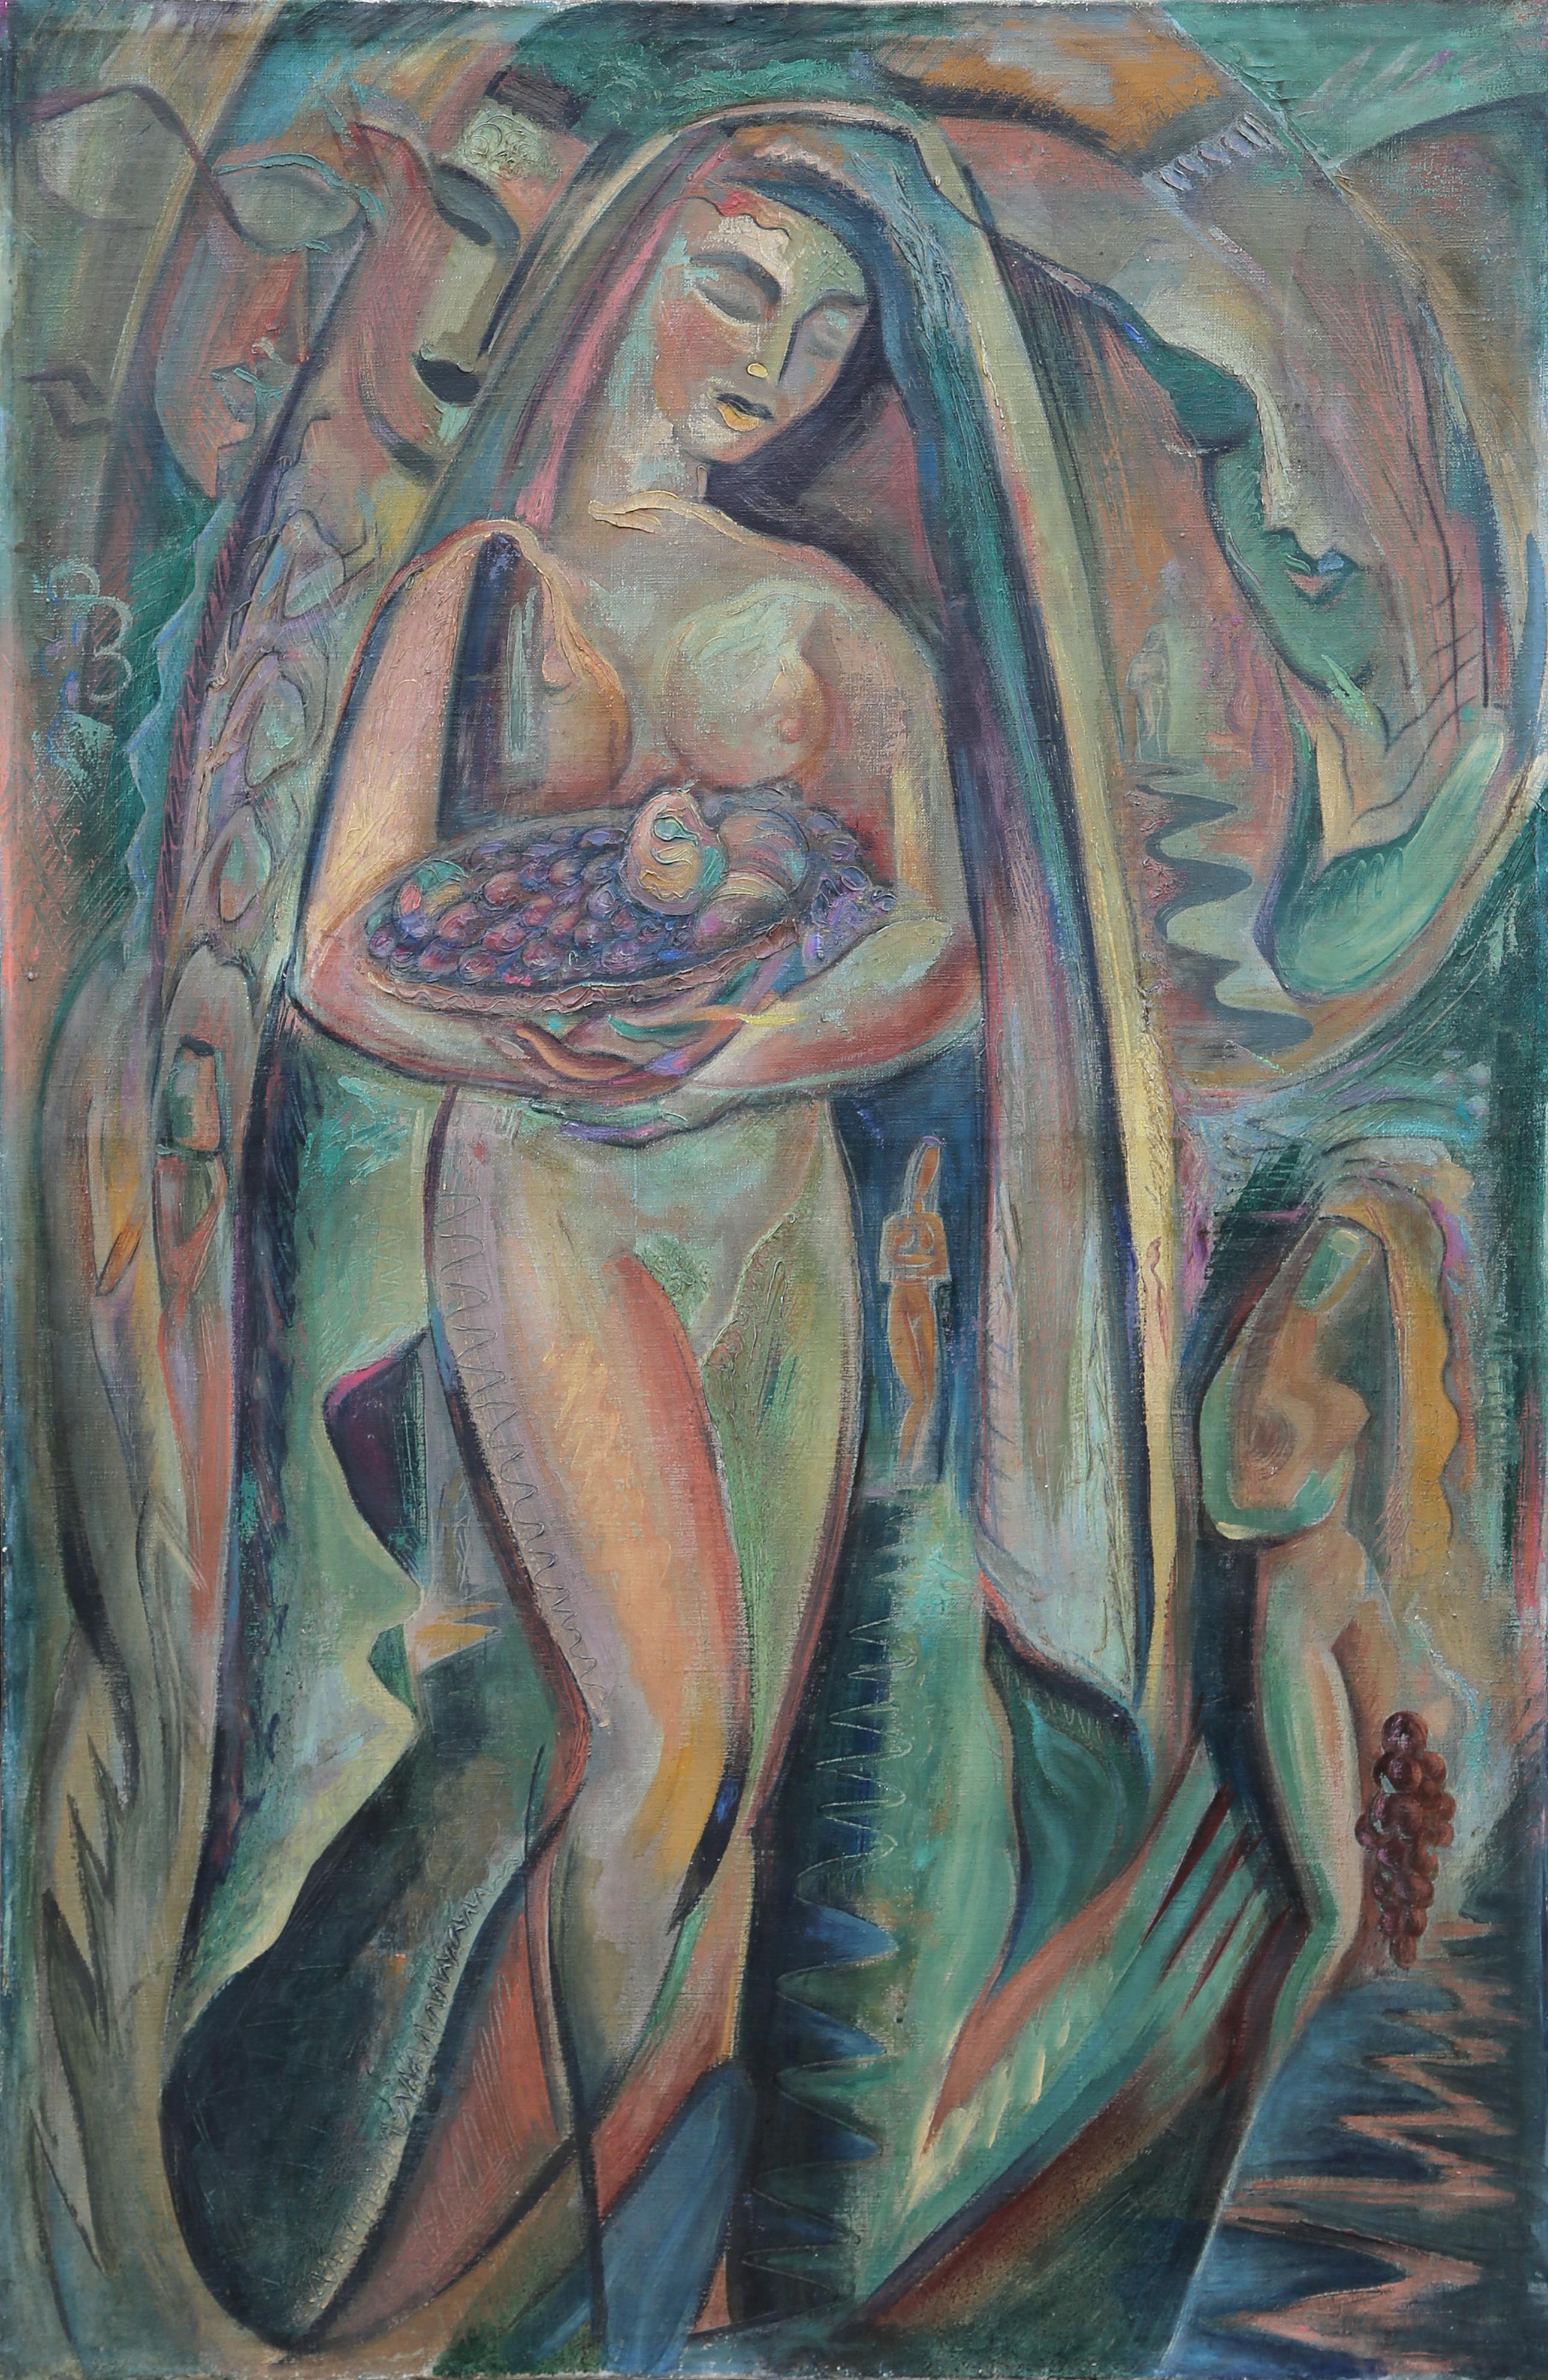 Figurative Painting Alexander Raymond Katz - Peinture à l'huile - Nu avec panier de fruits, par A. Raymond Katz vers 1949